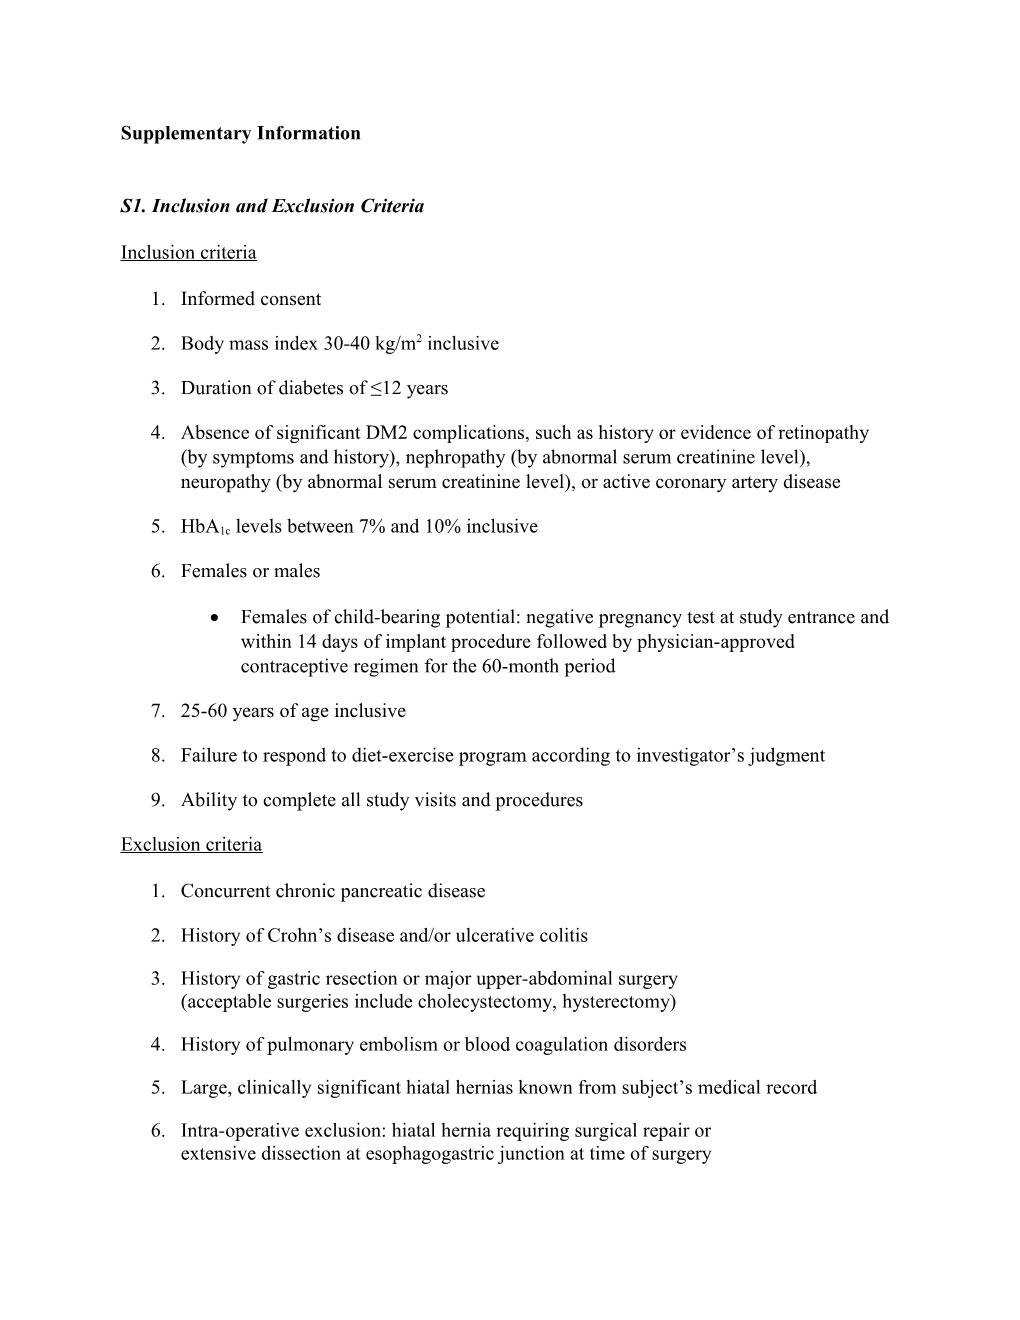 S1. Inclusion and Exclusion Criteria